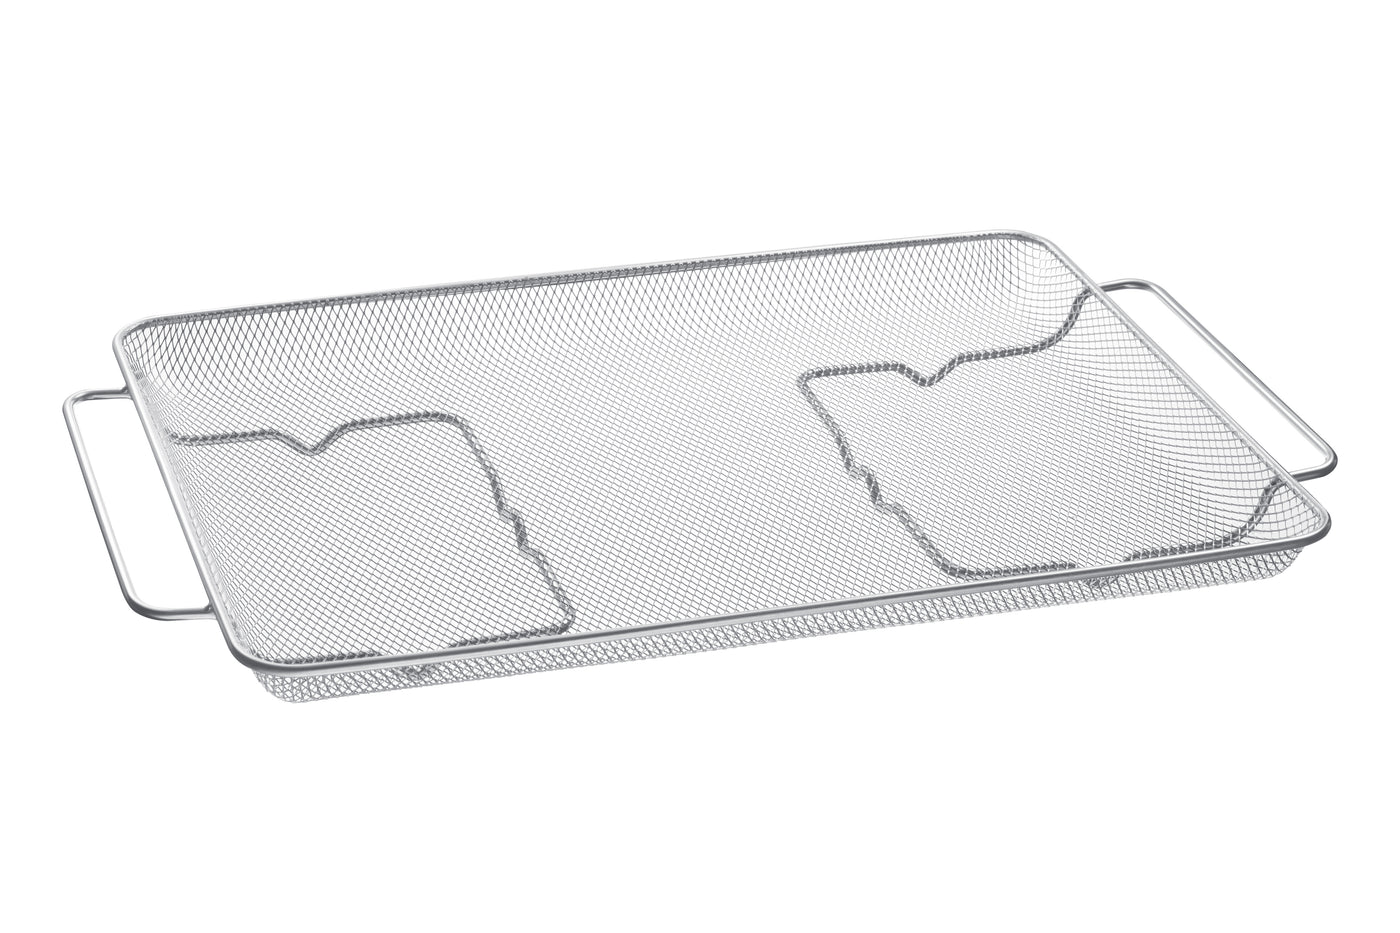 Samsung Bespoke White Glass Induction Range (6.3cu.ft.) - NE63BB891112AC